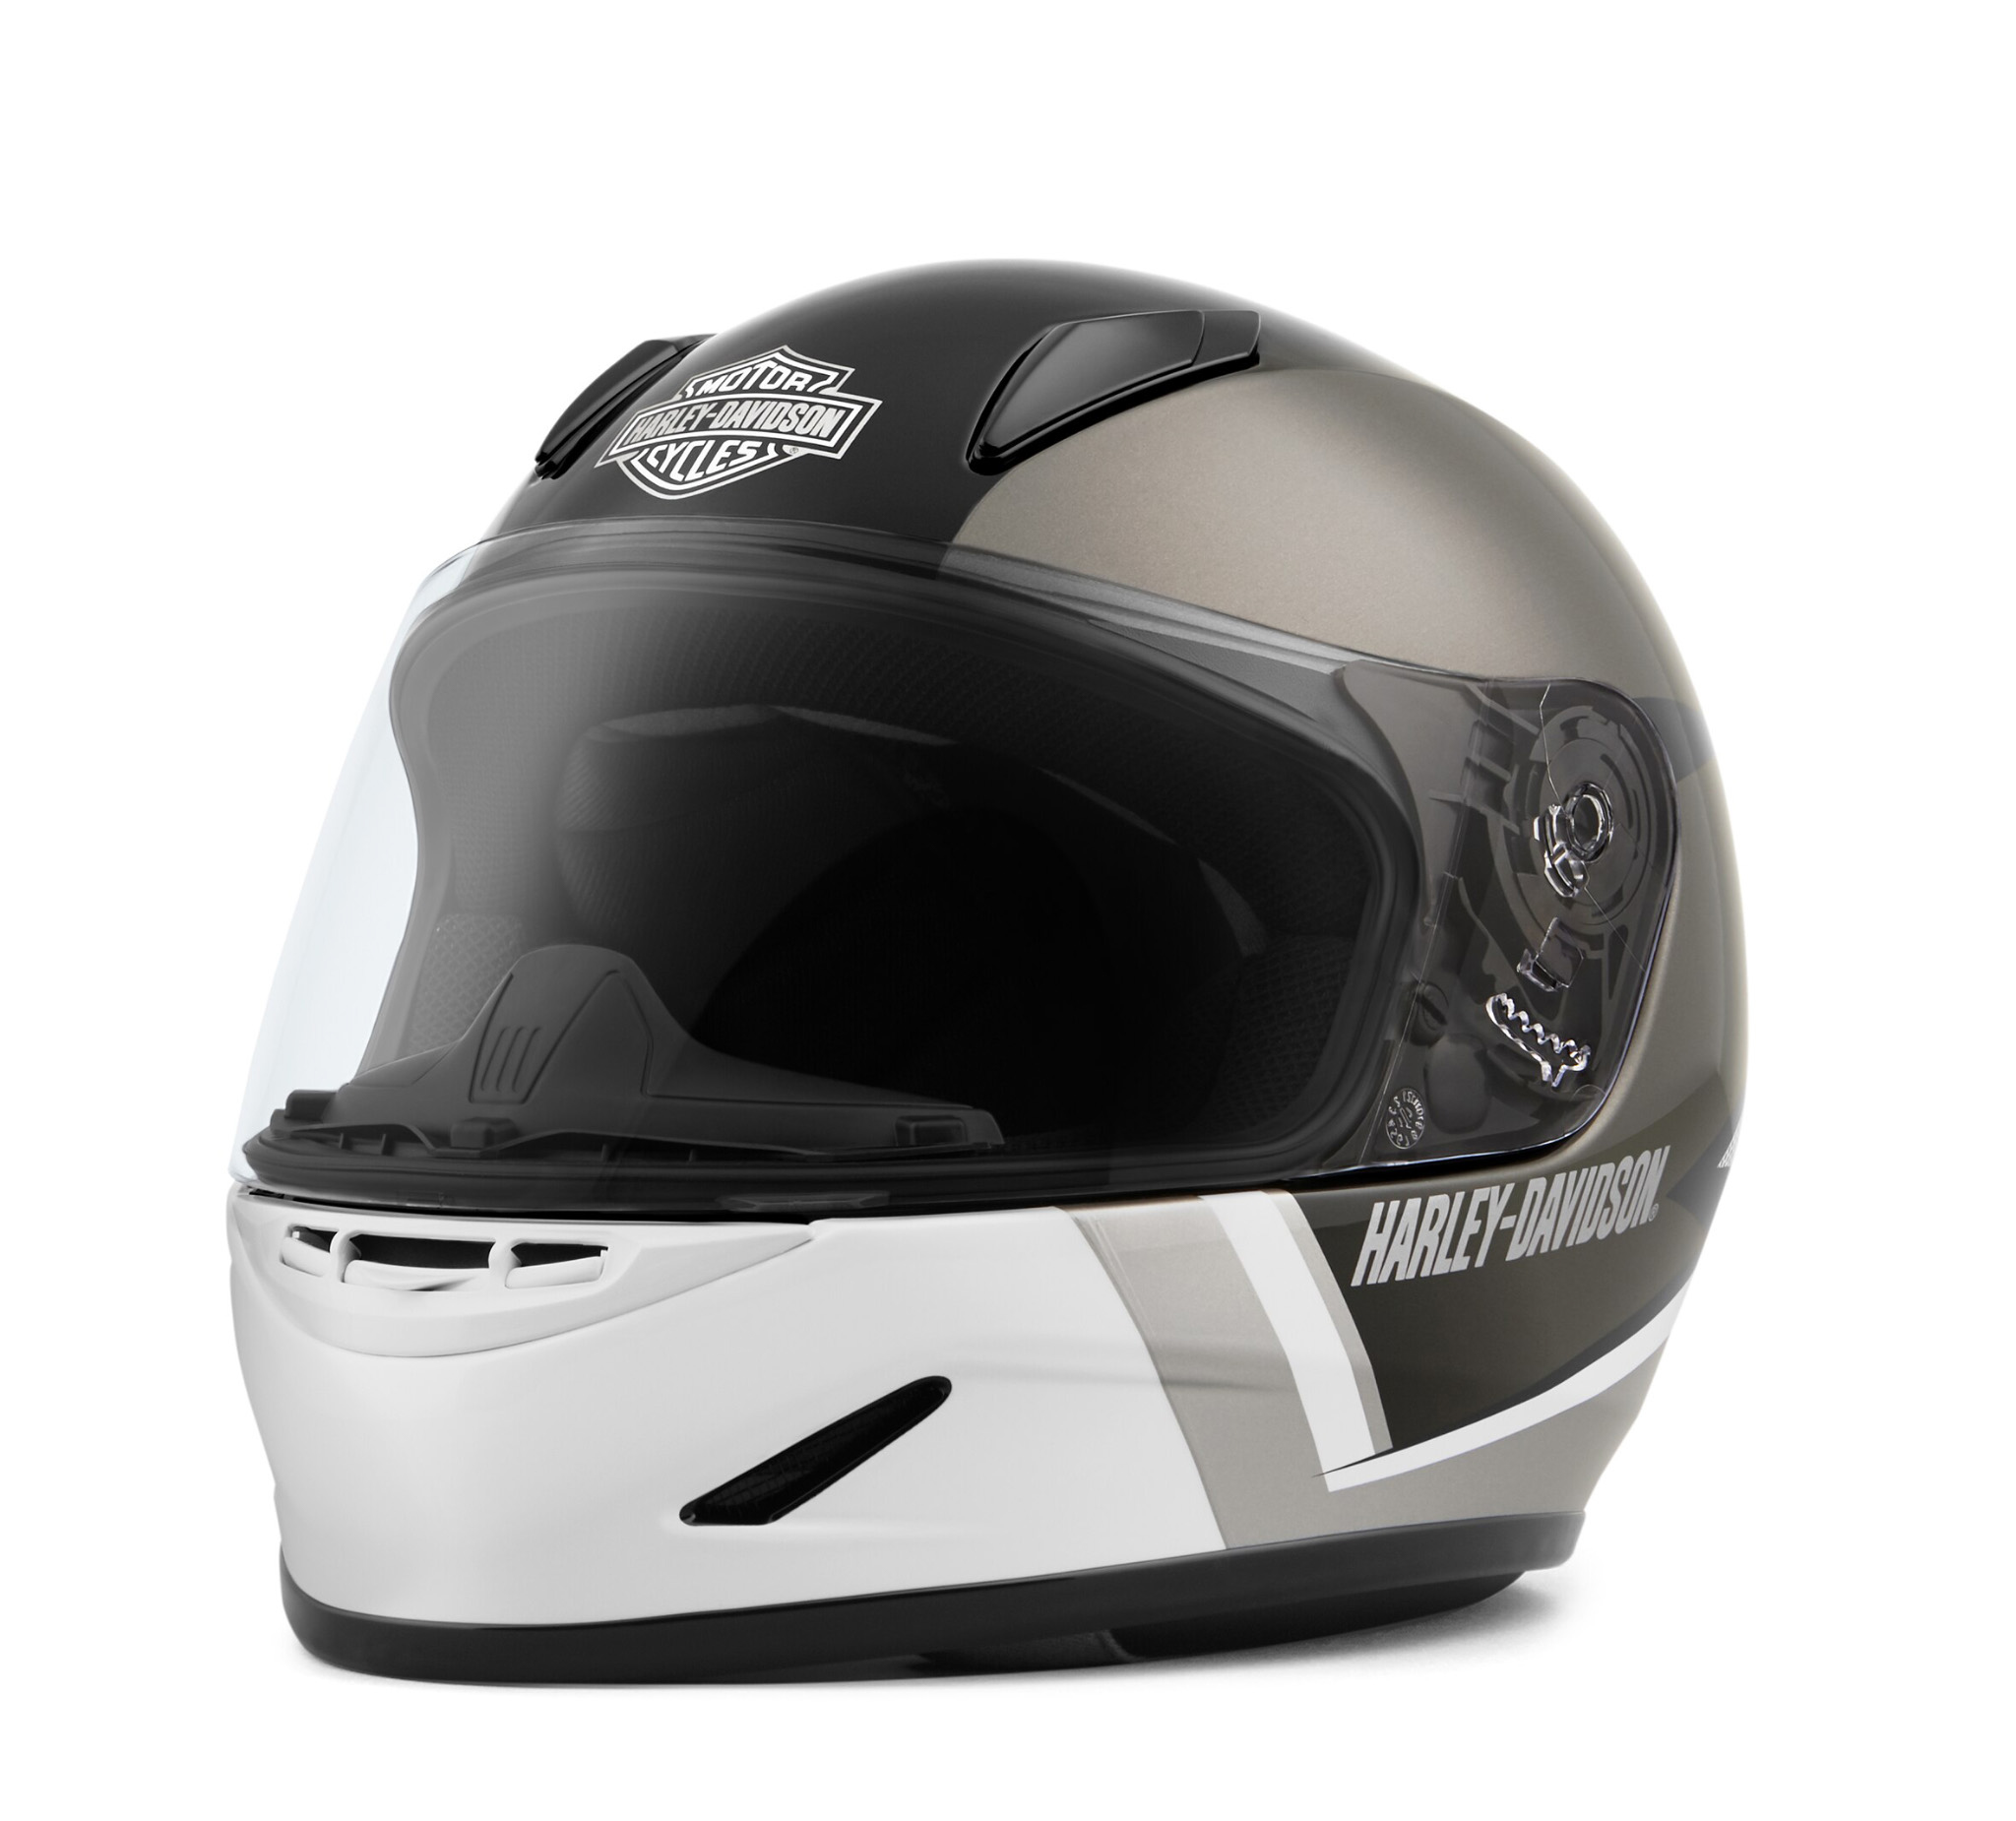 Kid S Killian Youth H30 Full Face Helmet 98117 20vx Harley Davidson Indonesia